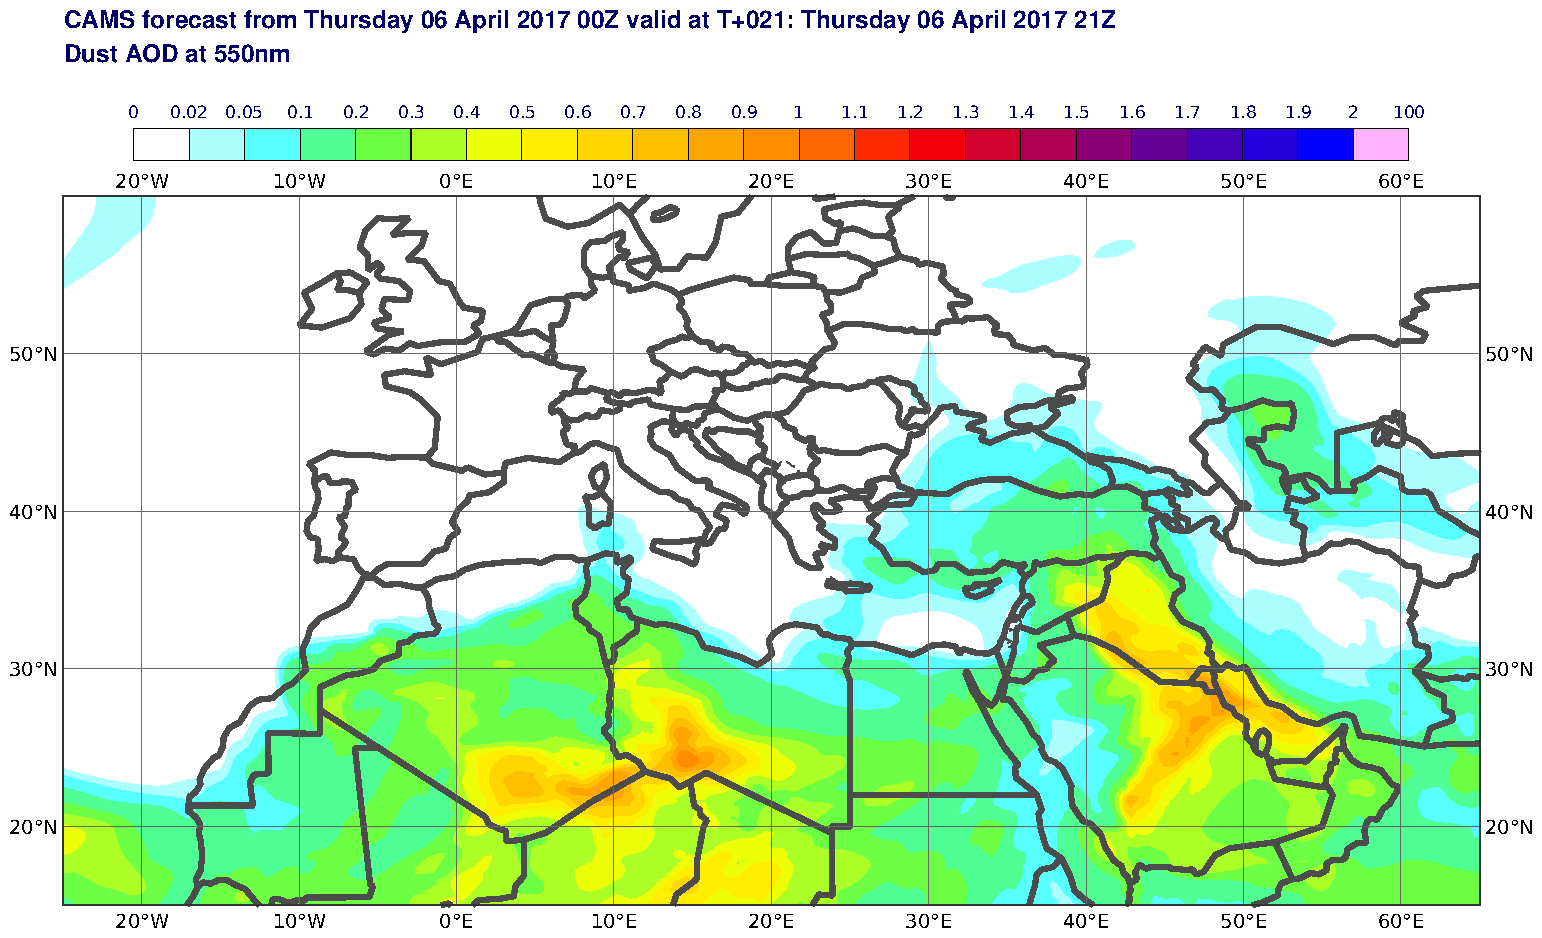 Dust AOD at 550nm valid at T21 - 2017-04-06 21:00